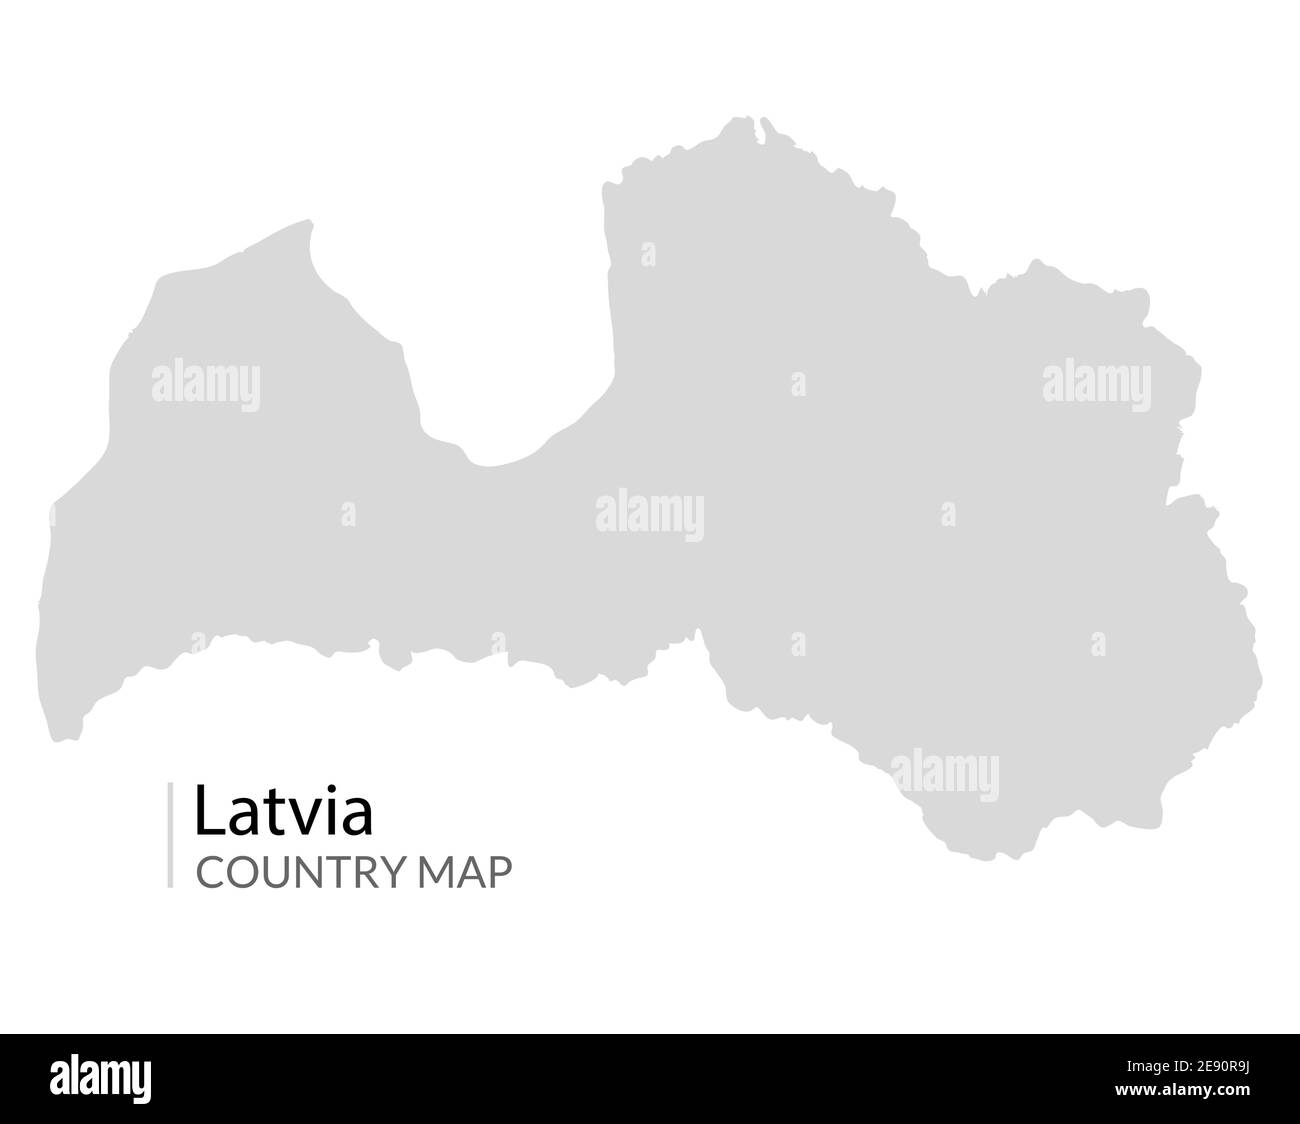 Latvia vector map contour. Europe latvian baltic region country map Stock Vector